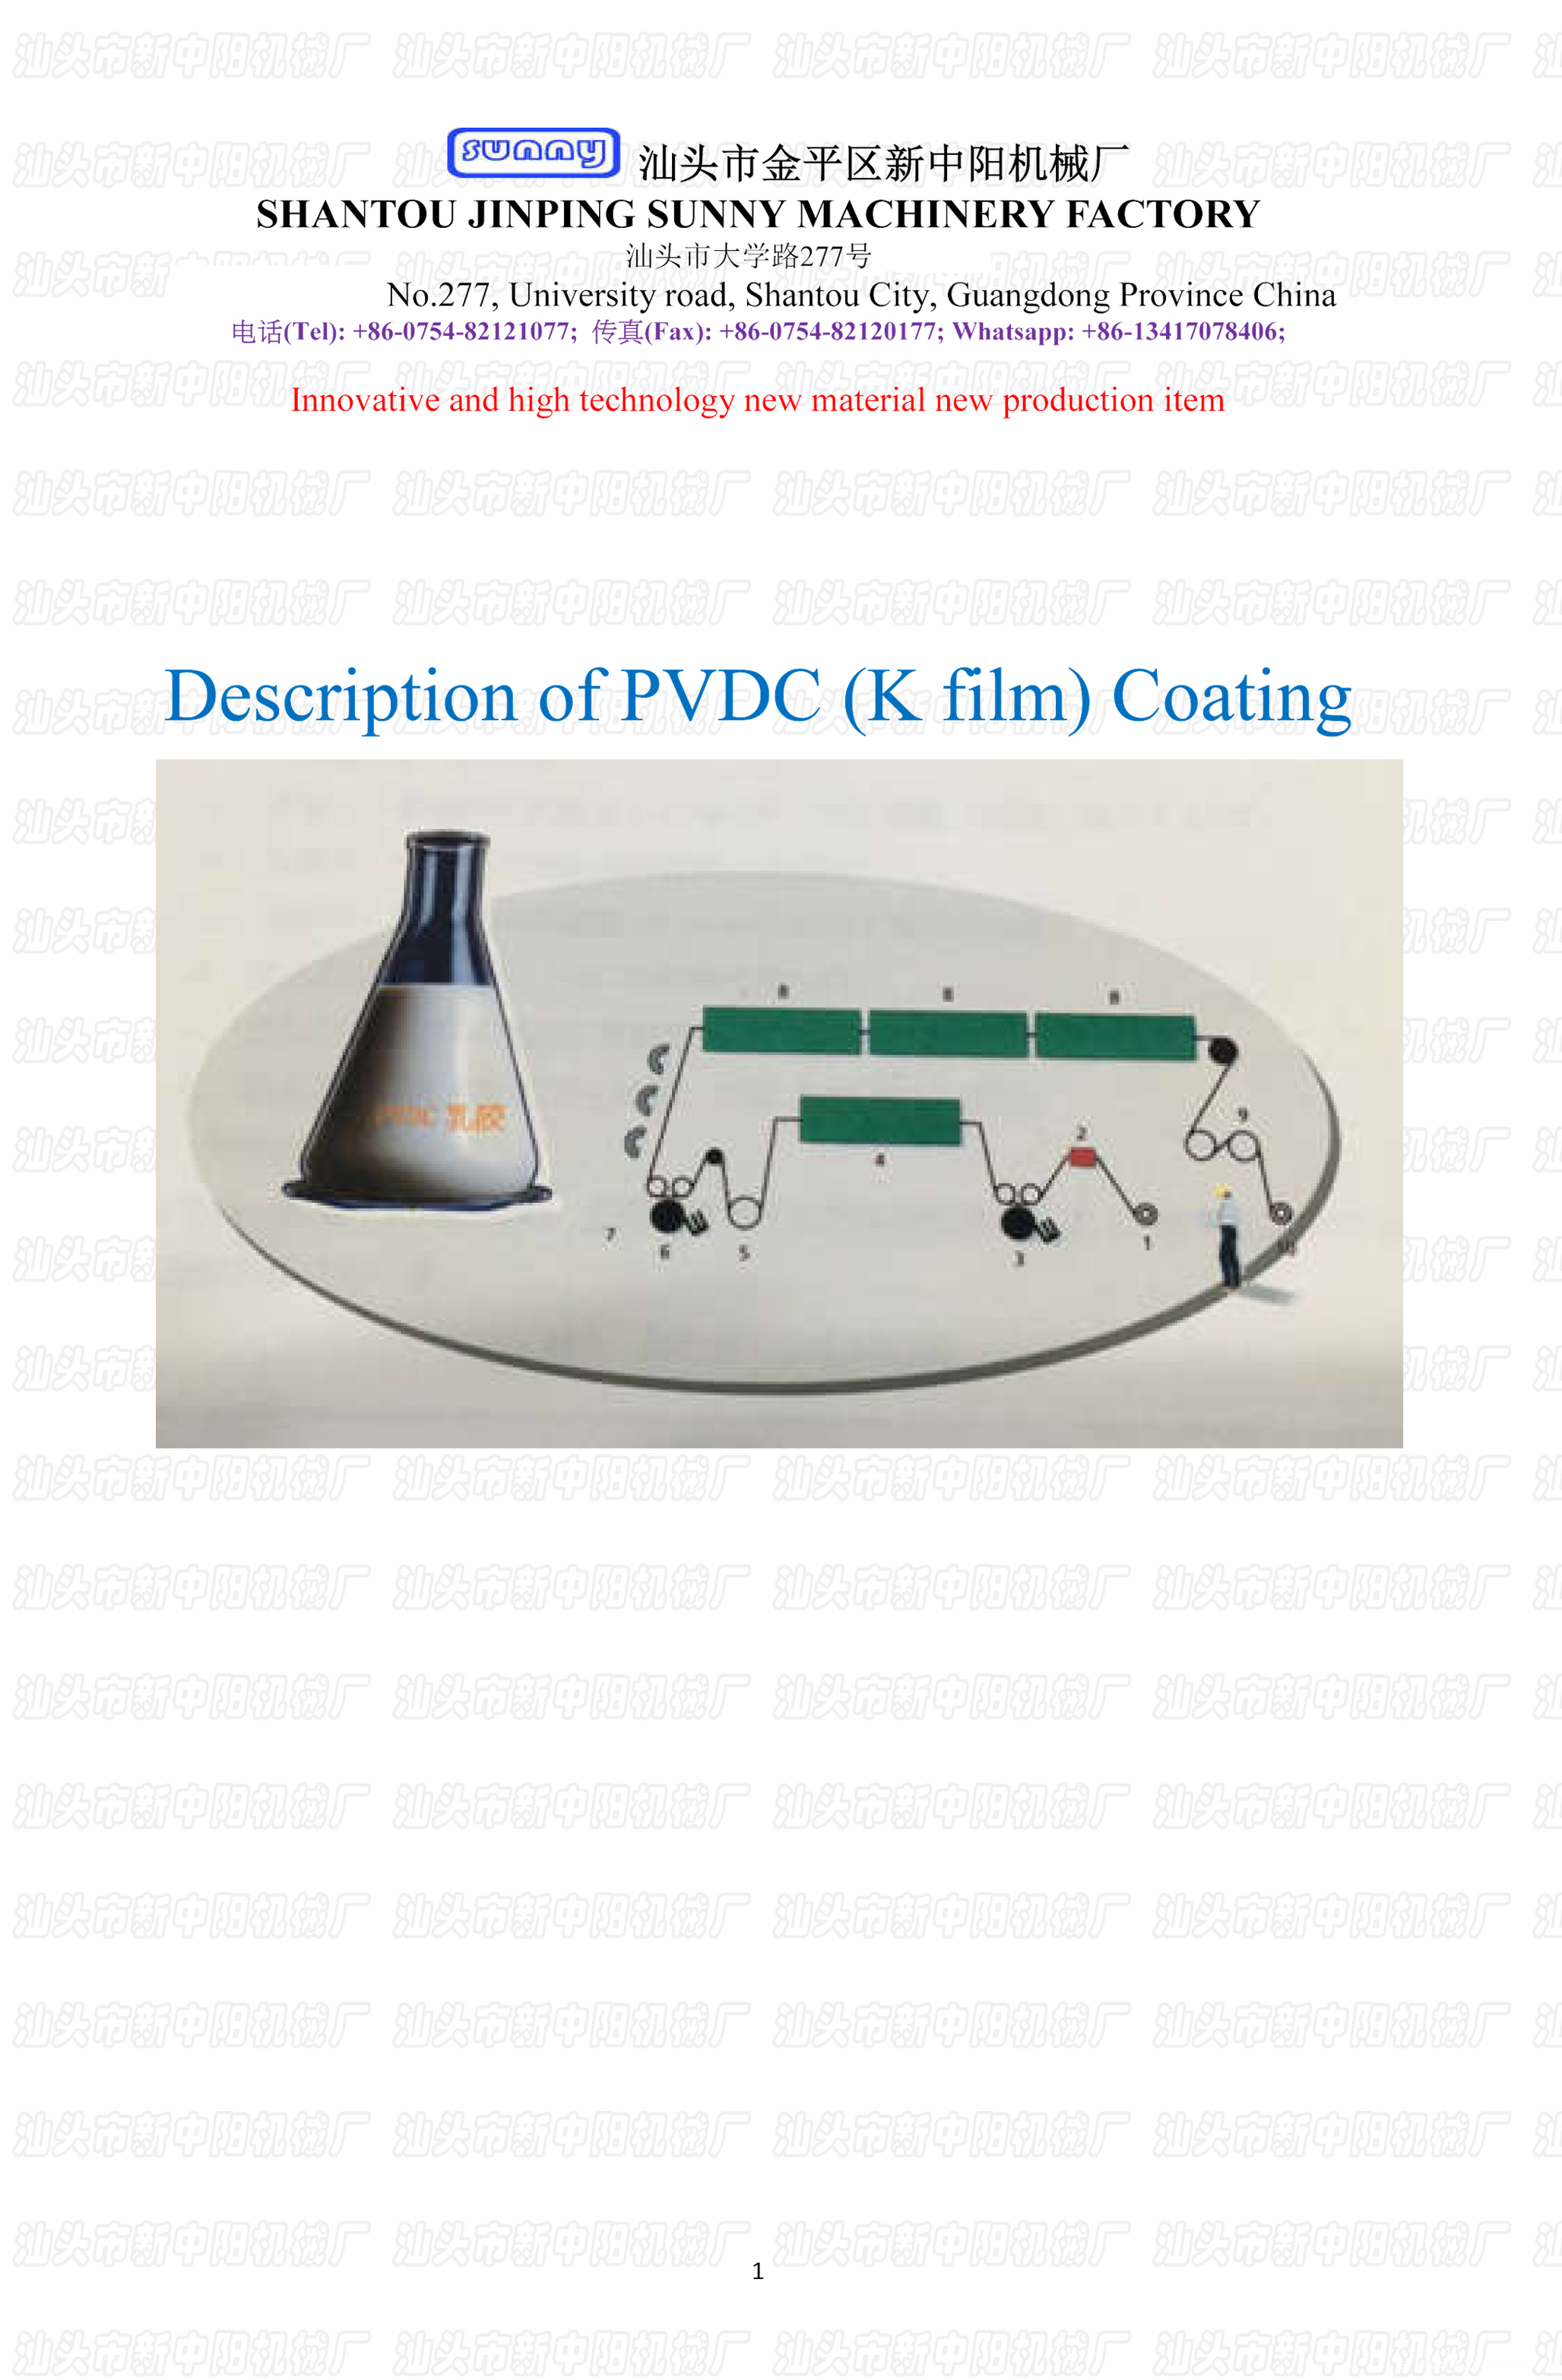 PVDC Coaitng 1